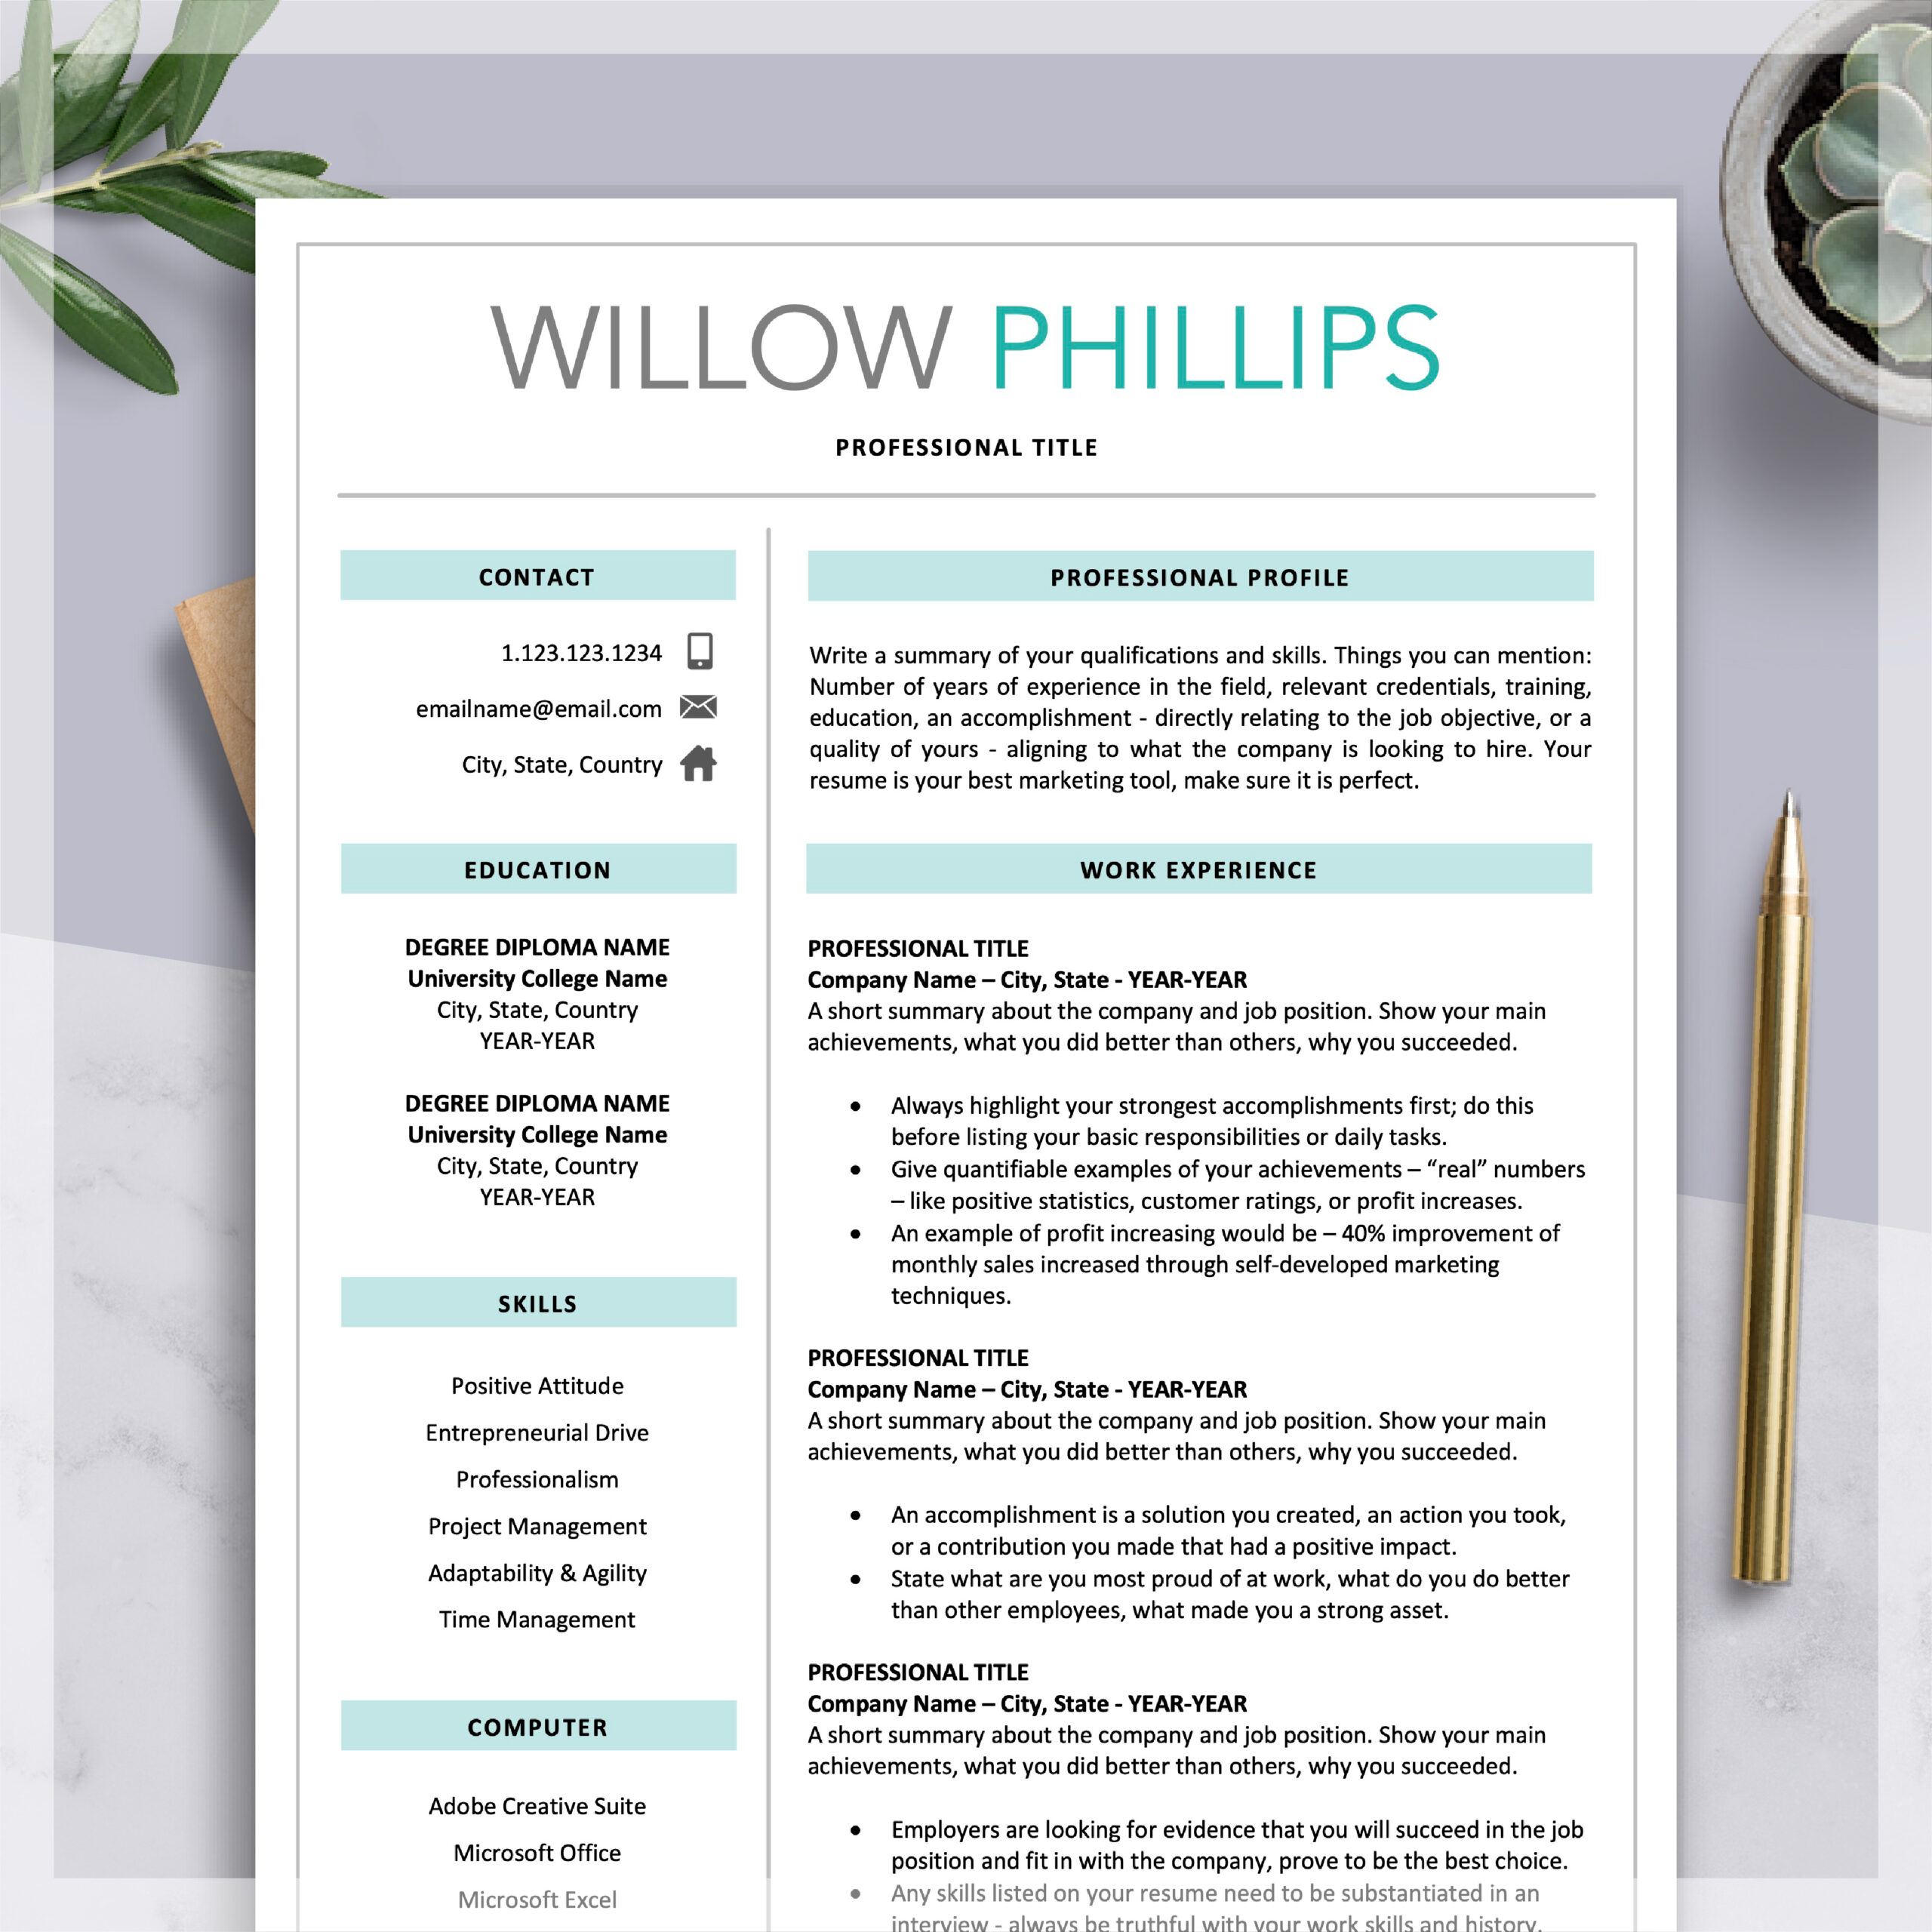 Willow Phillips 1